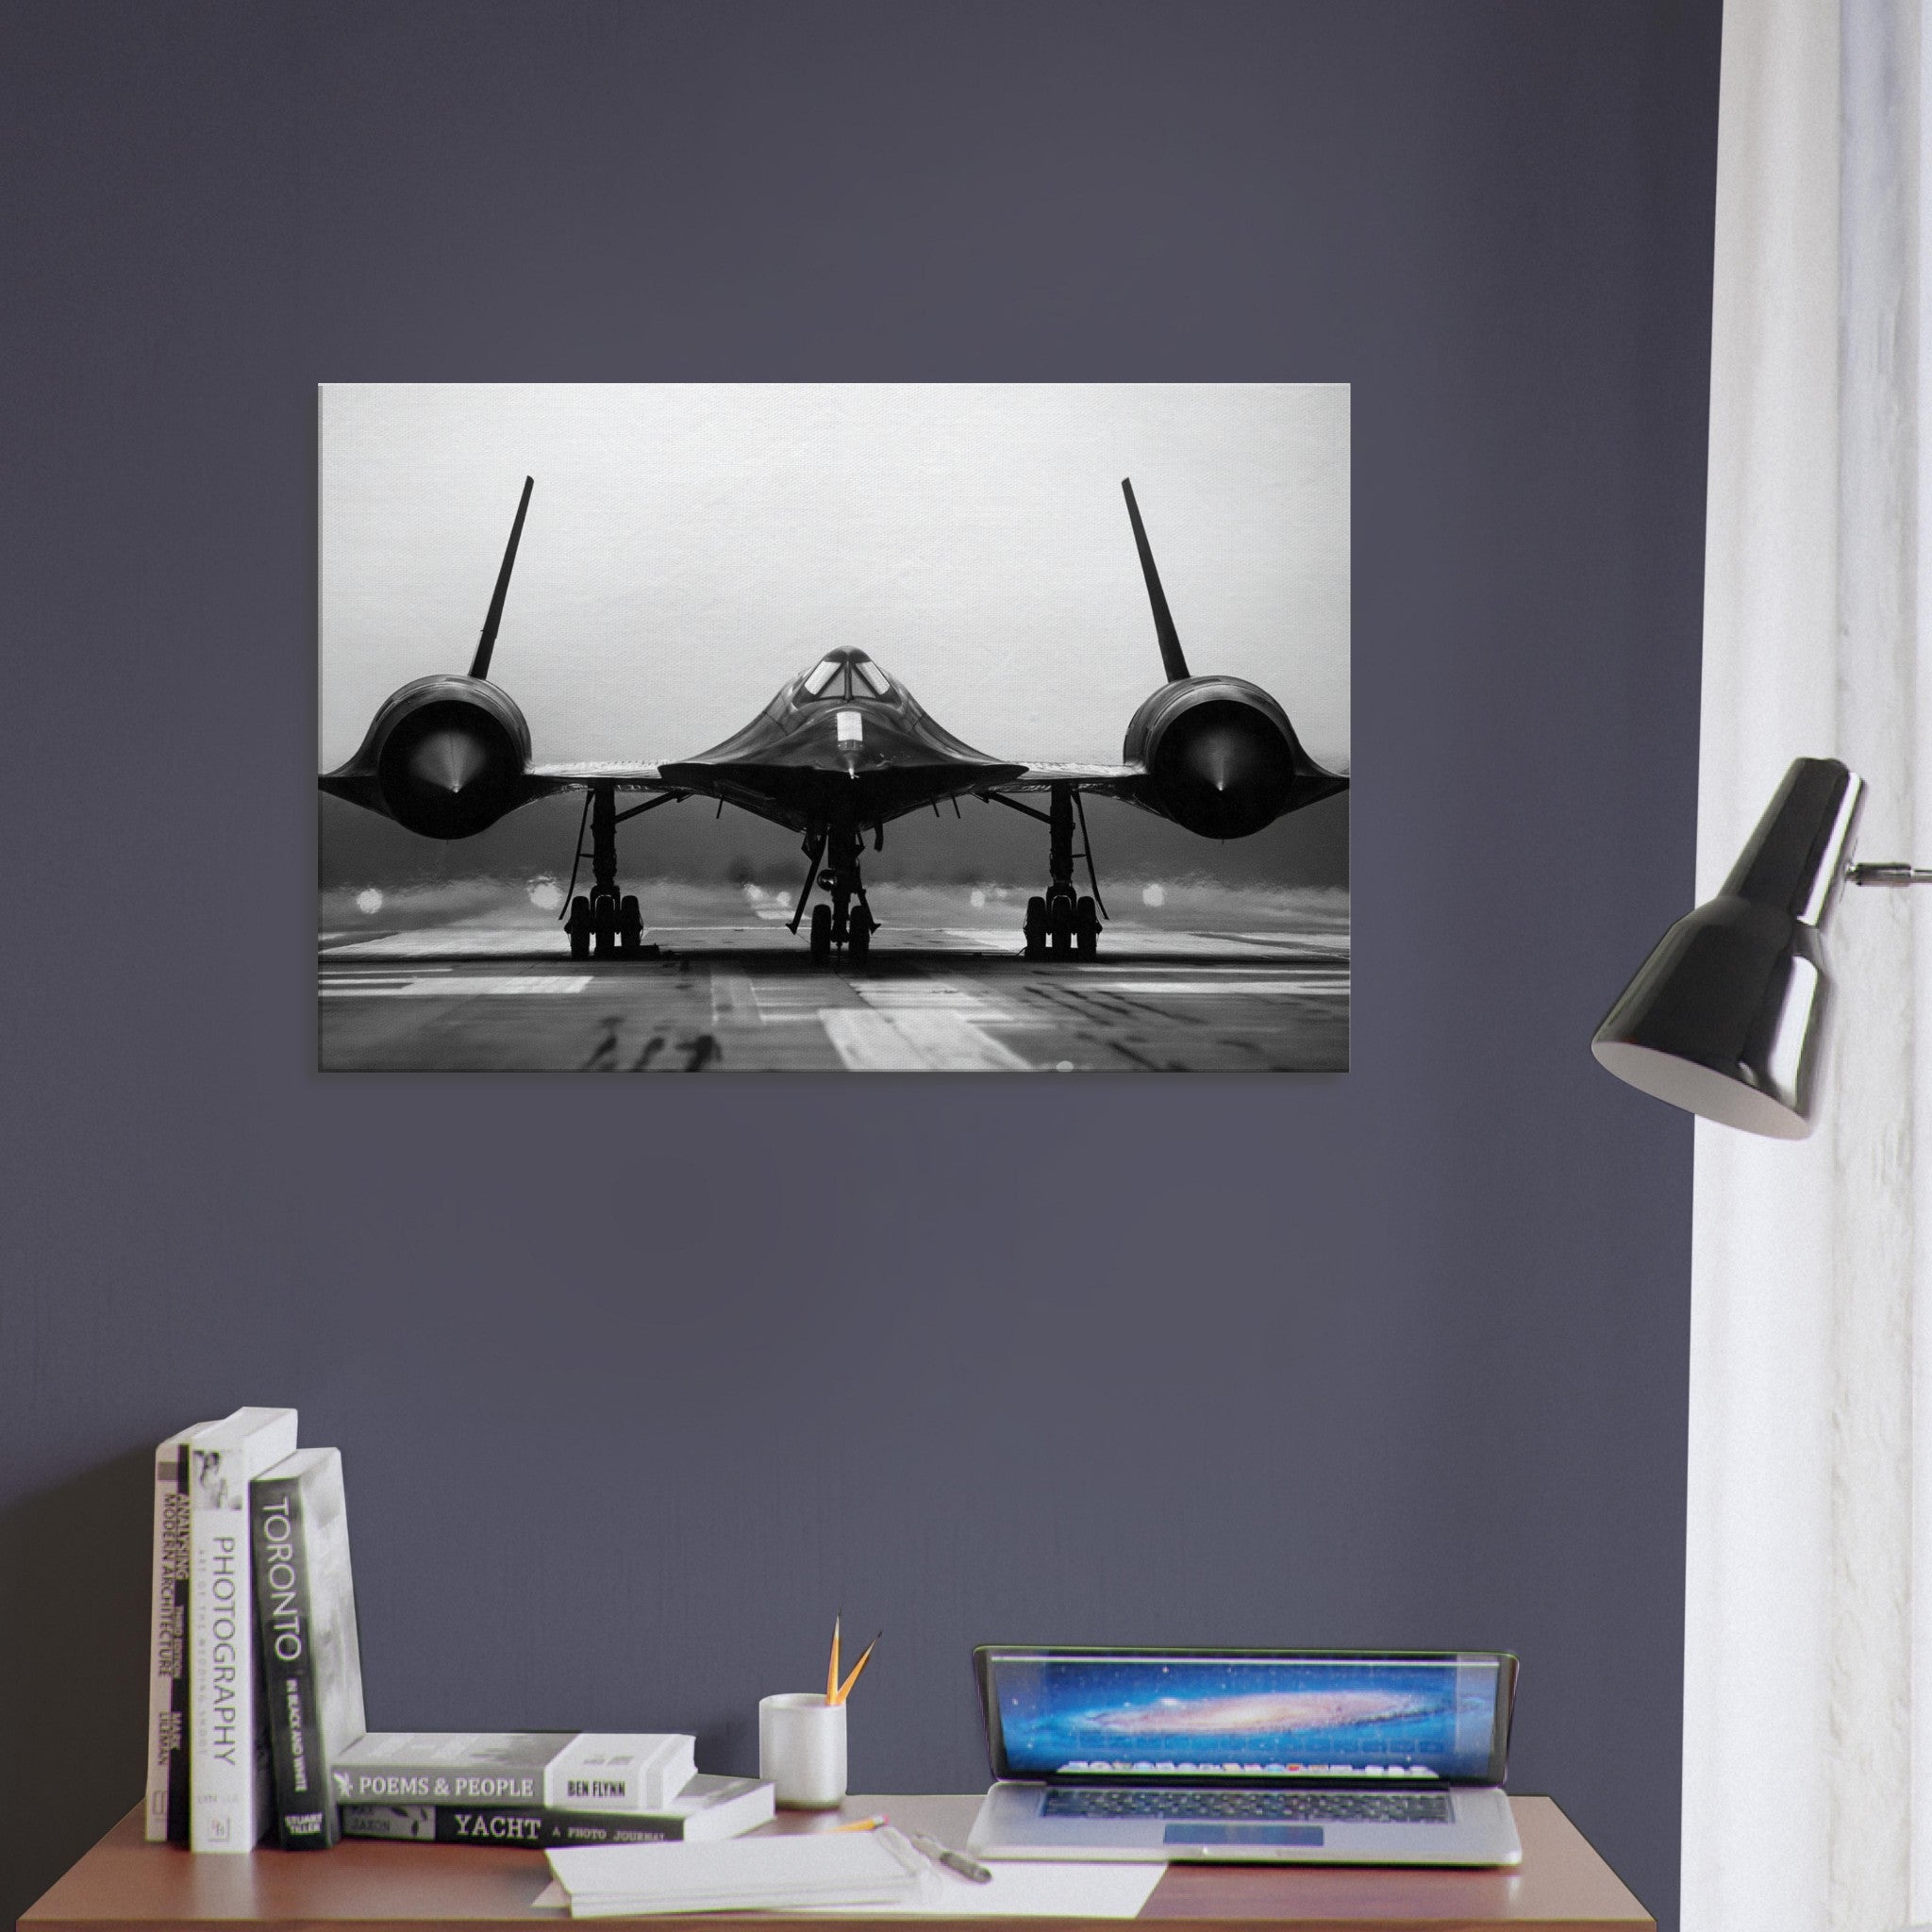 SR-71 "Blackbird" Front View on Canvas - I Love a Hangar